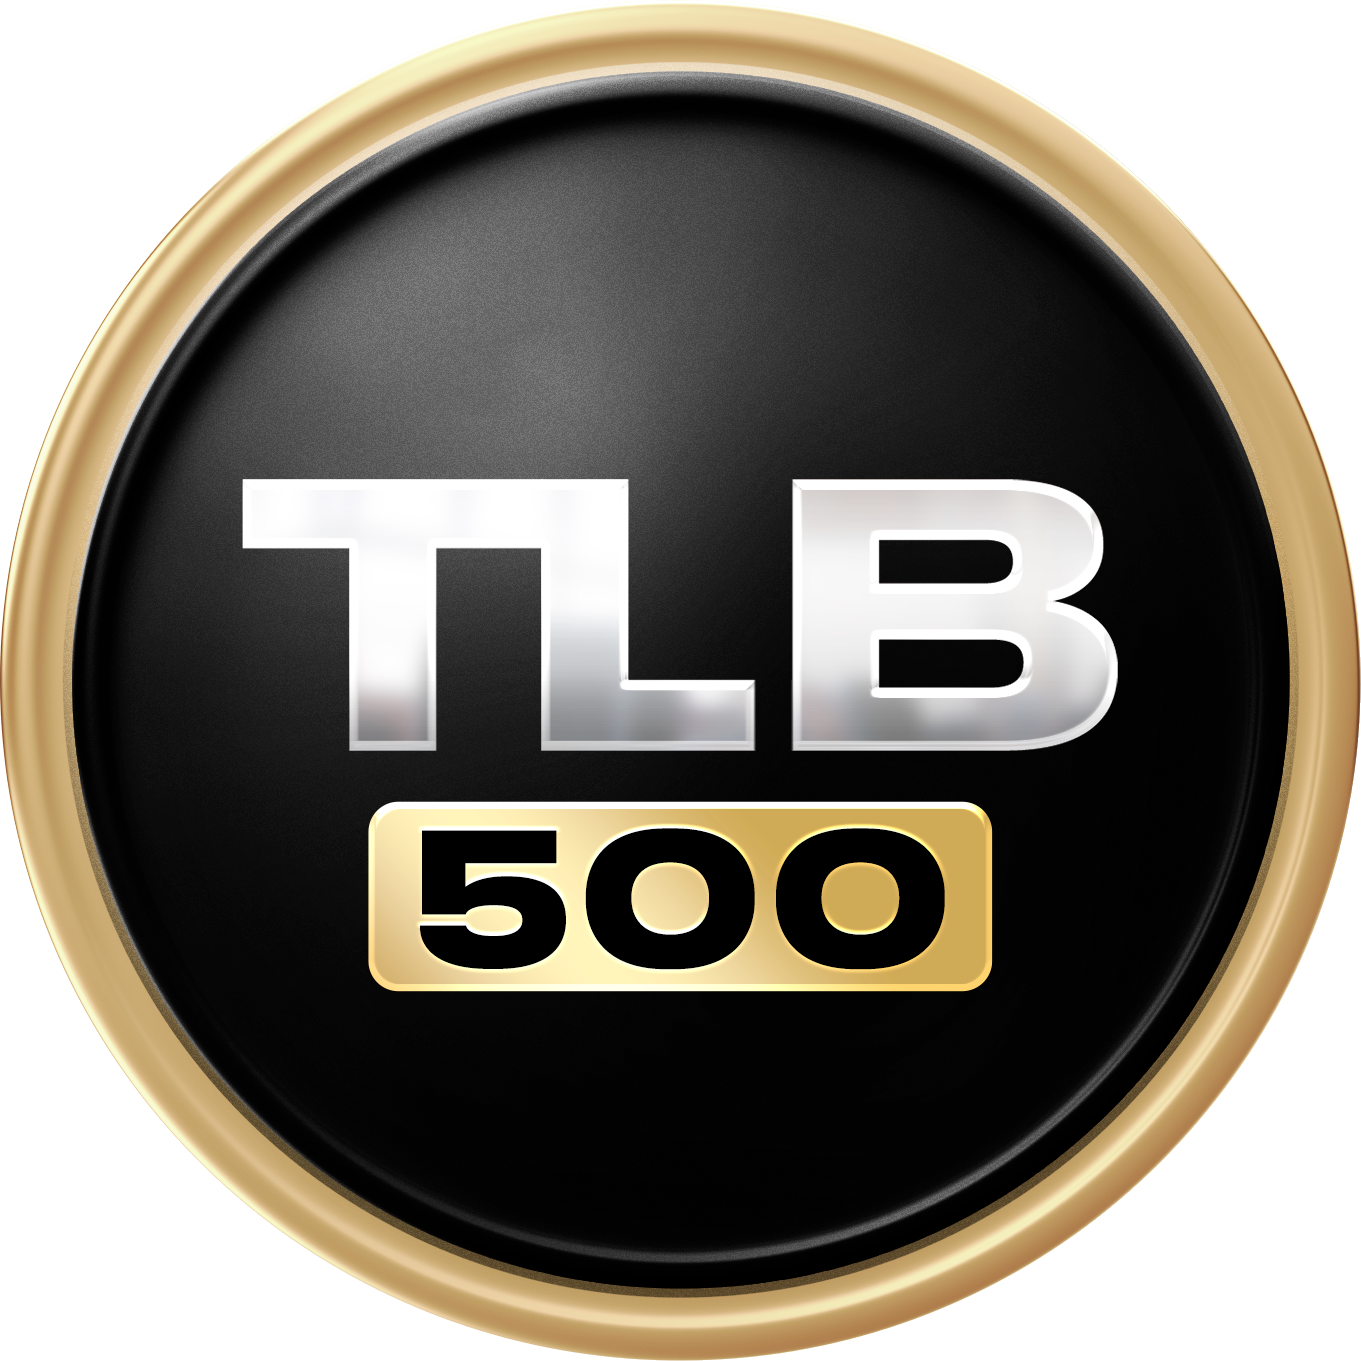 TLB500